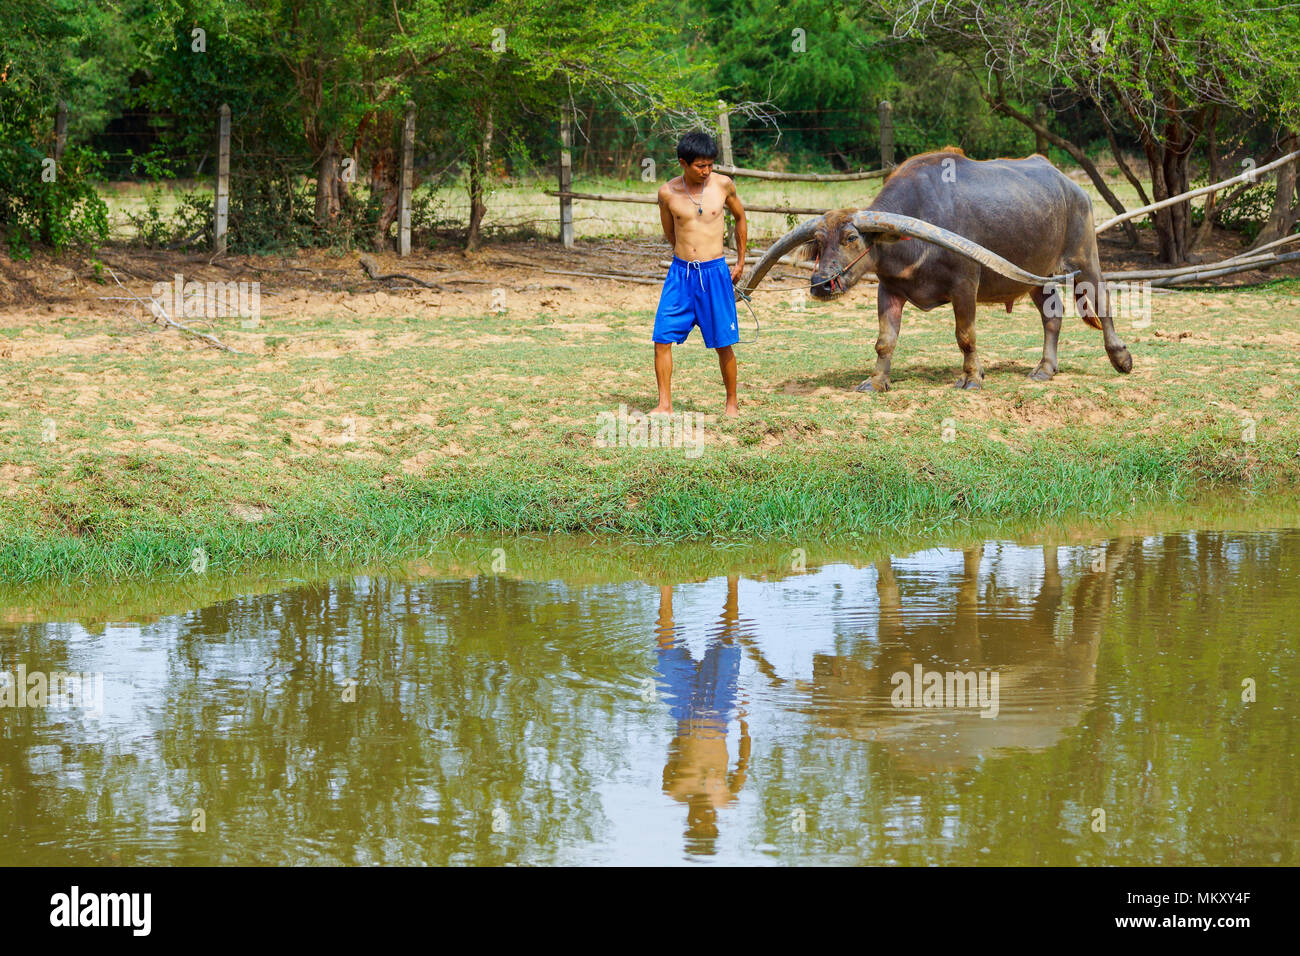 Singburi, Thailand - May 19, 2013: Cattleman without shirt pulling buffalo walking on rural field in Singburi, Thailand Stock Photo